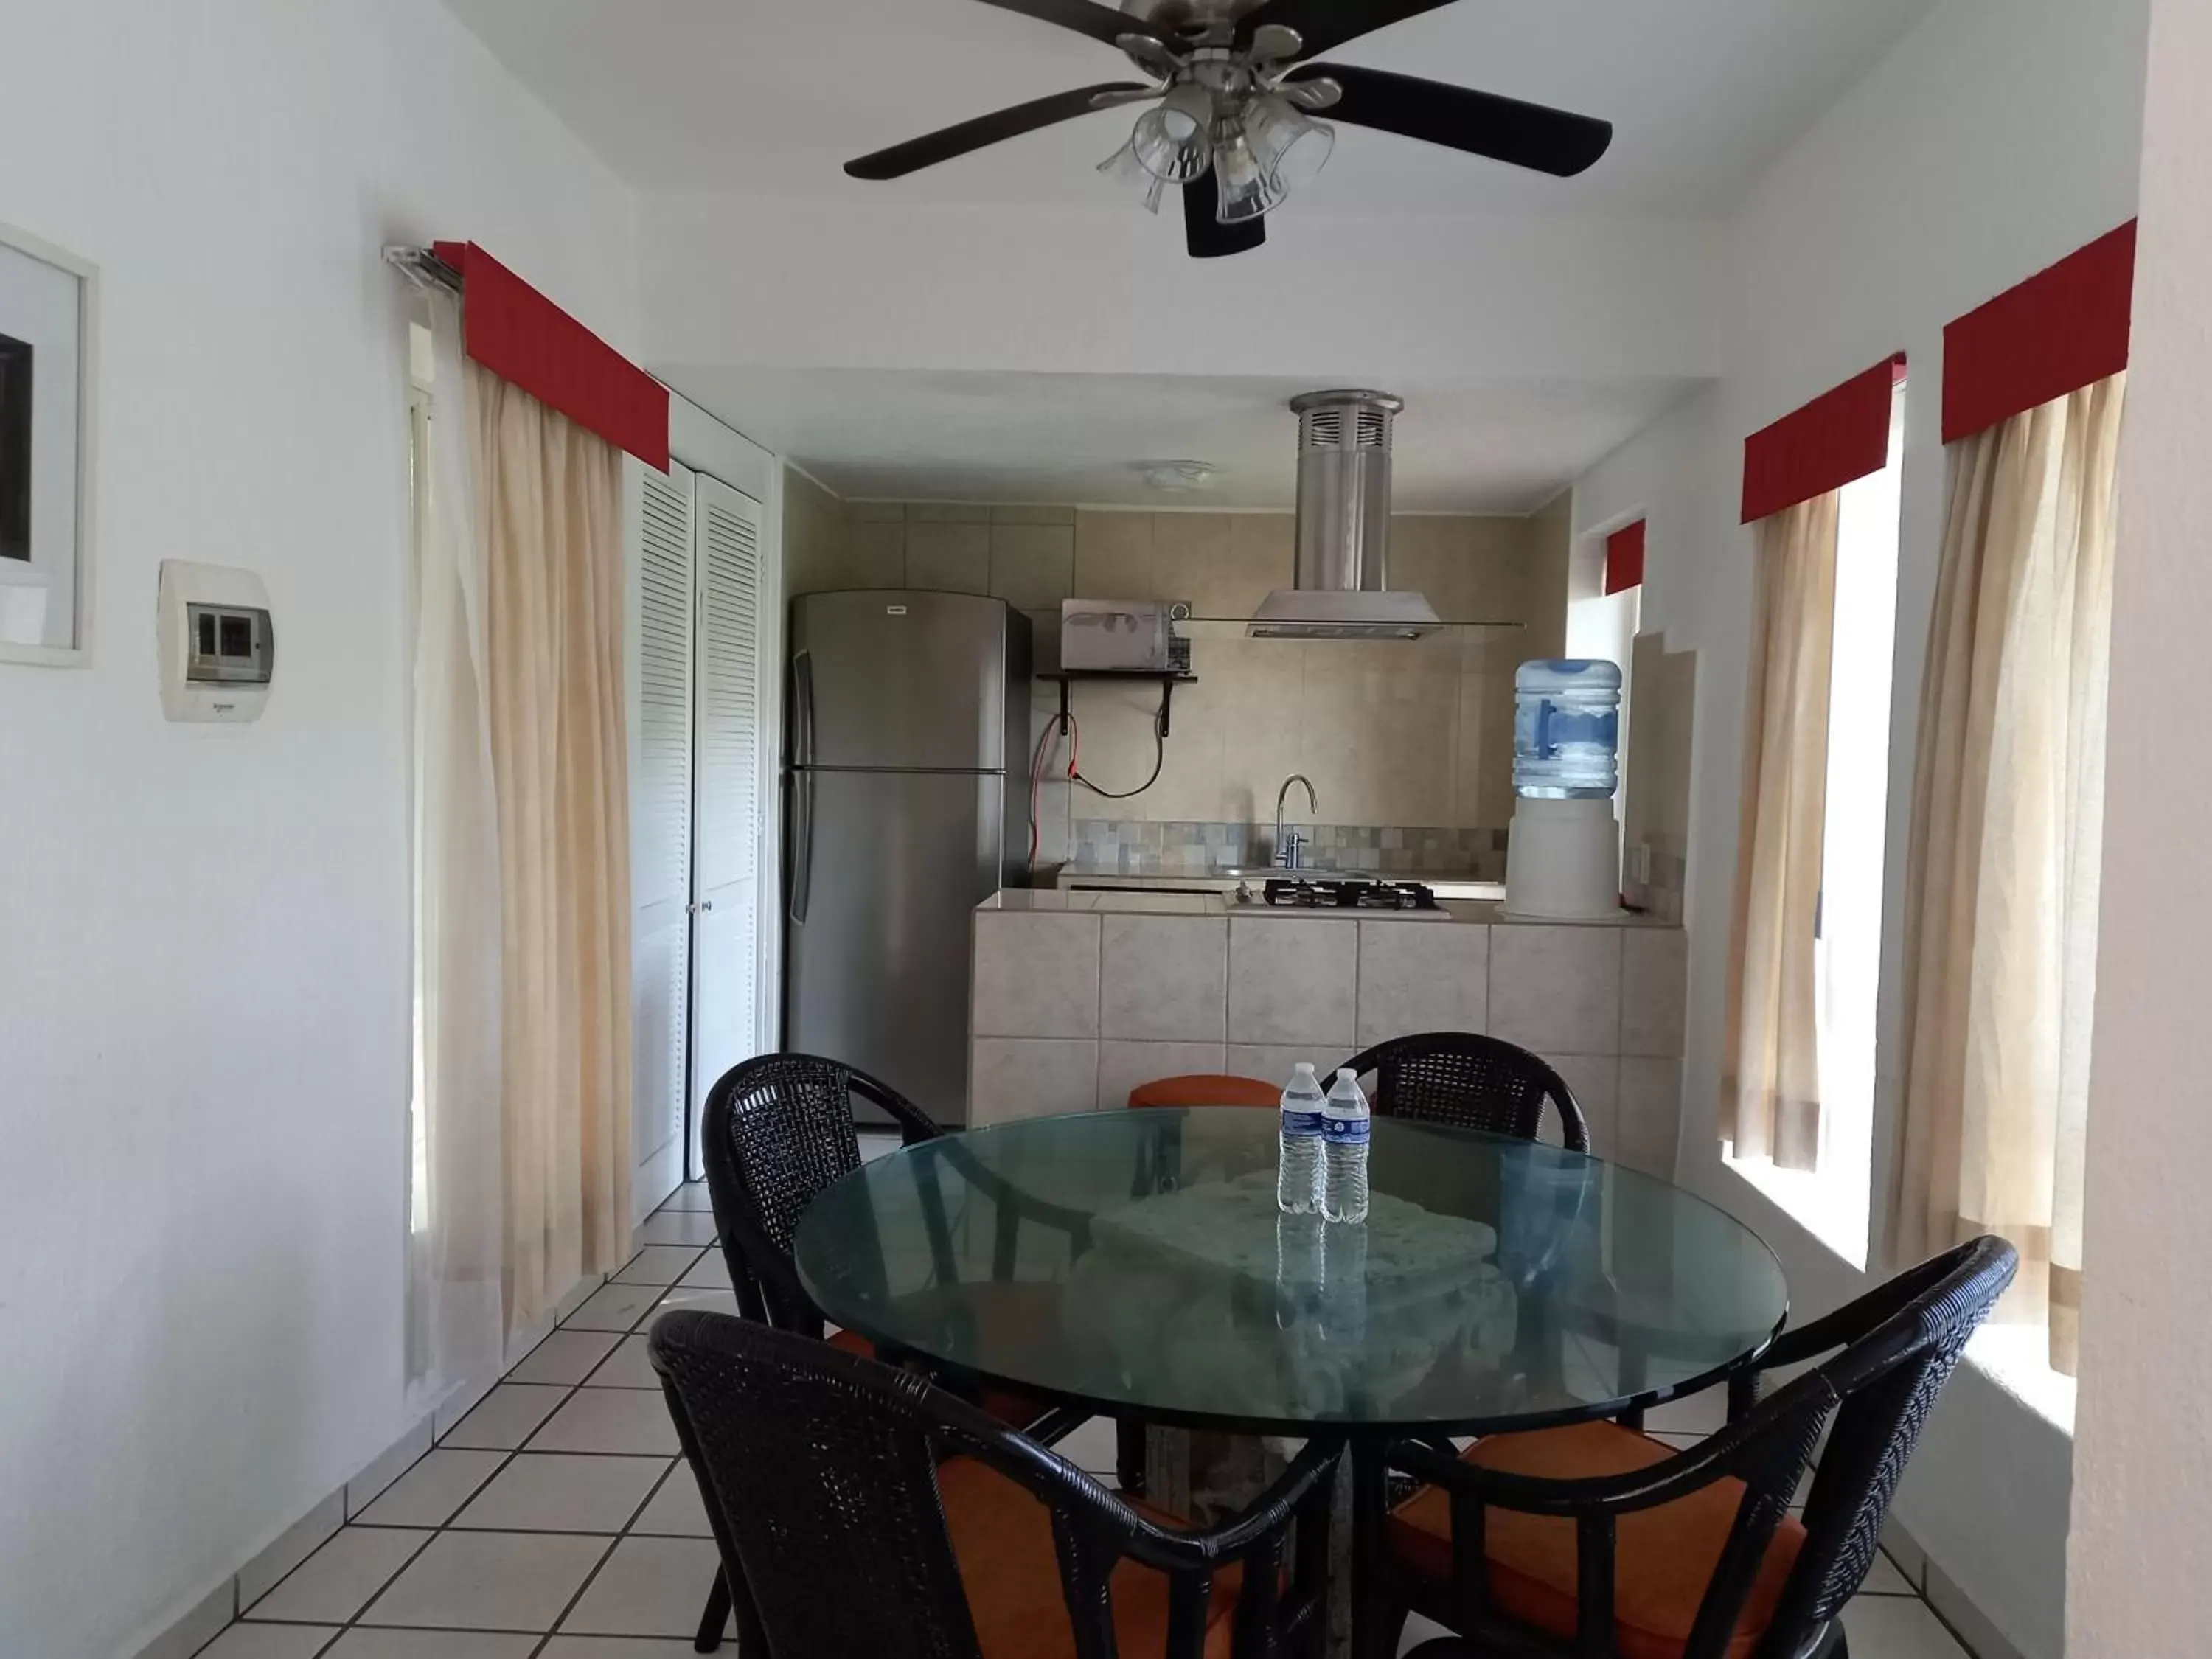 Photo of the whole room, Dining Area in Villas del Palmar Manzanillo with Beach Club